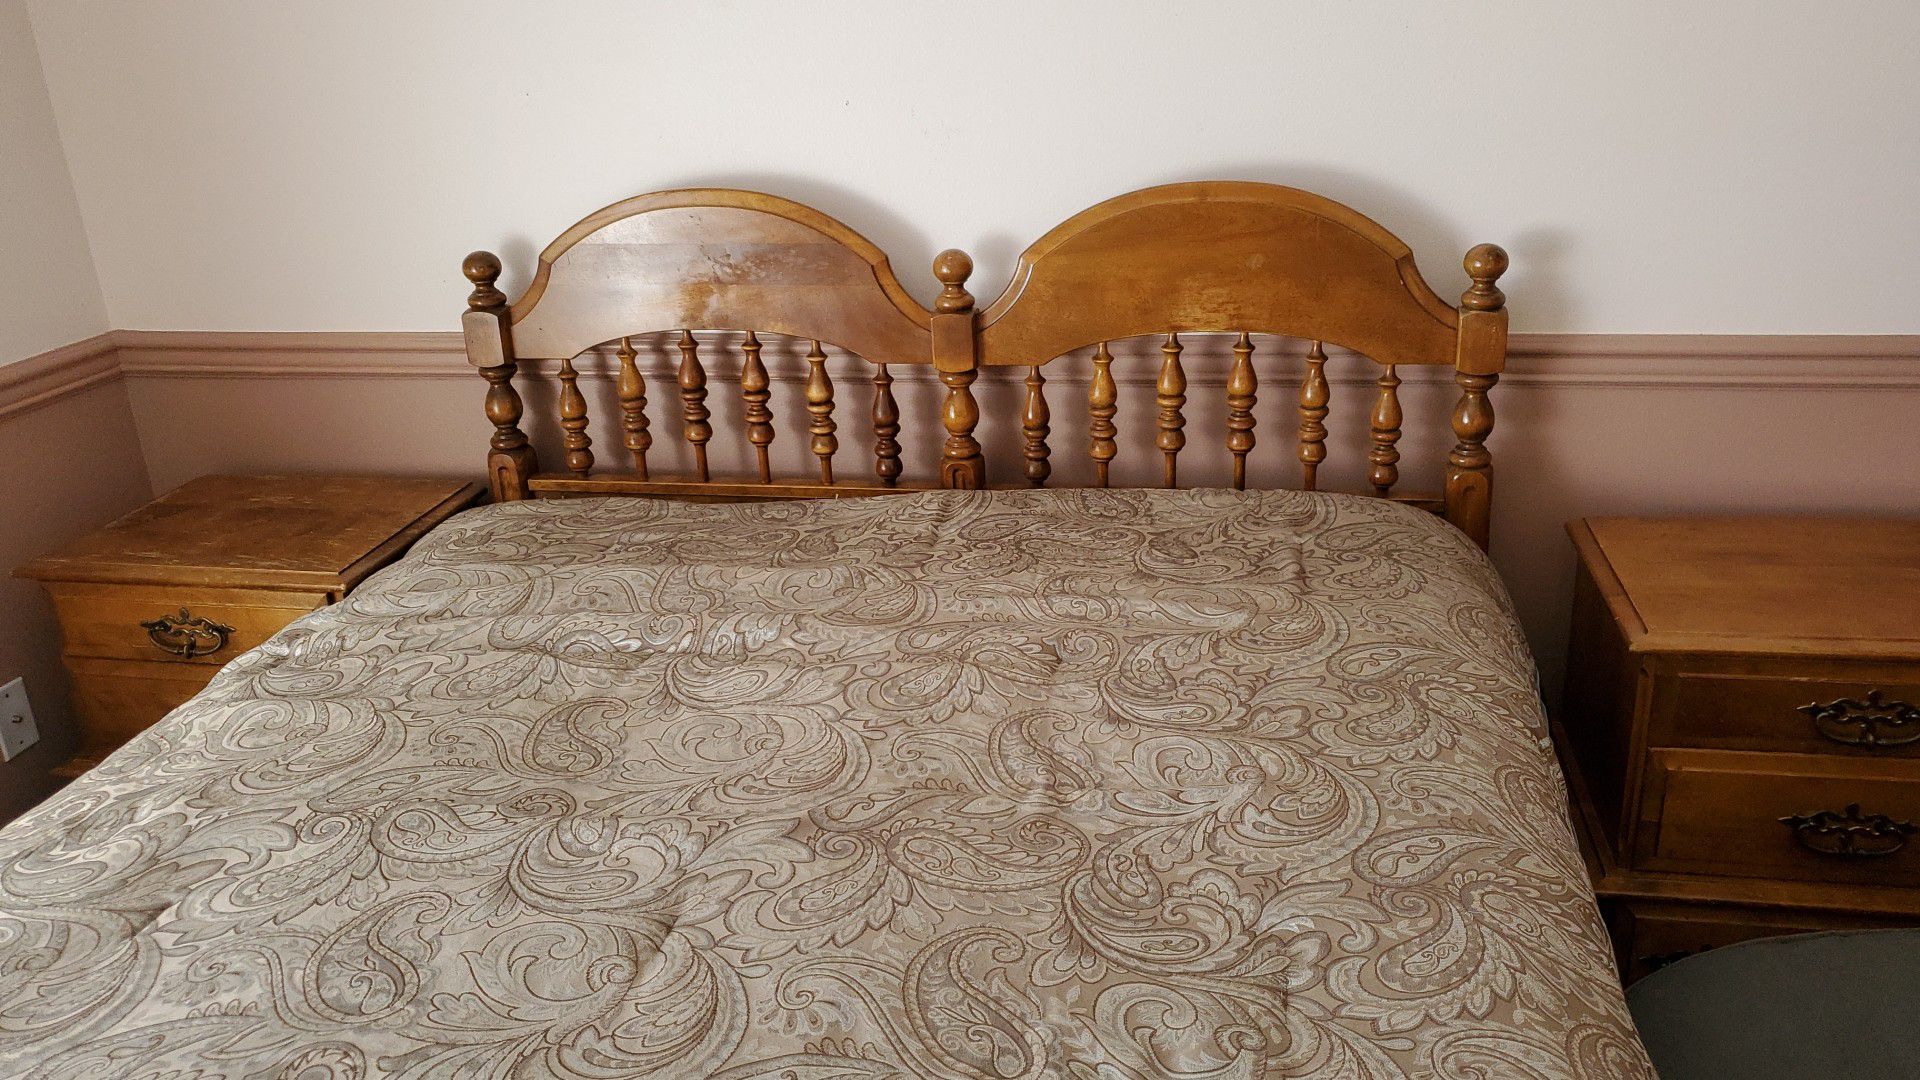 Queen size mattress, box springs, frame and headboard